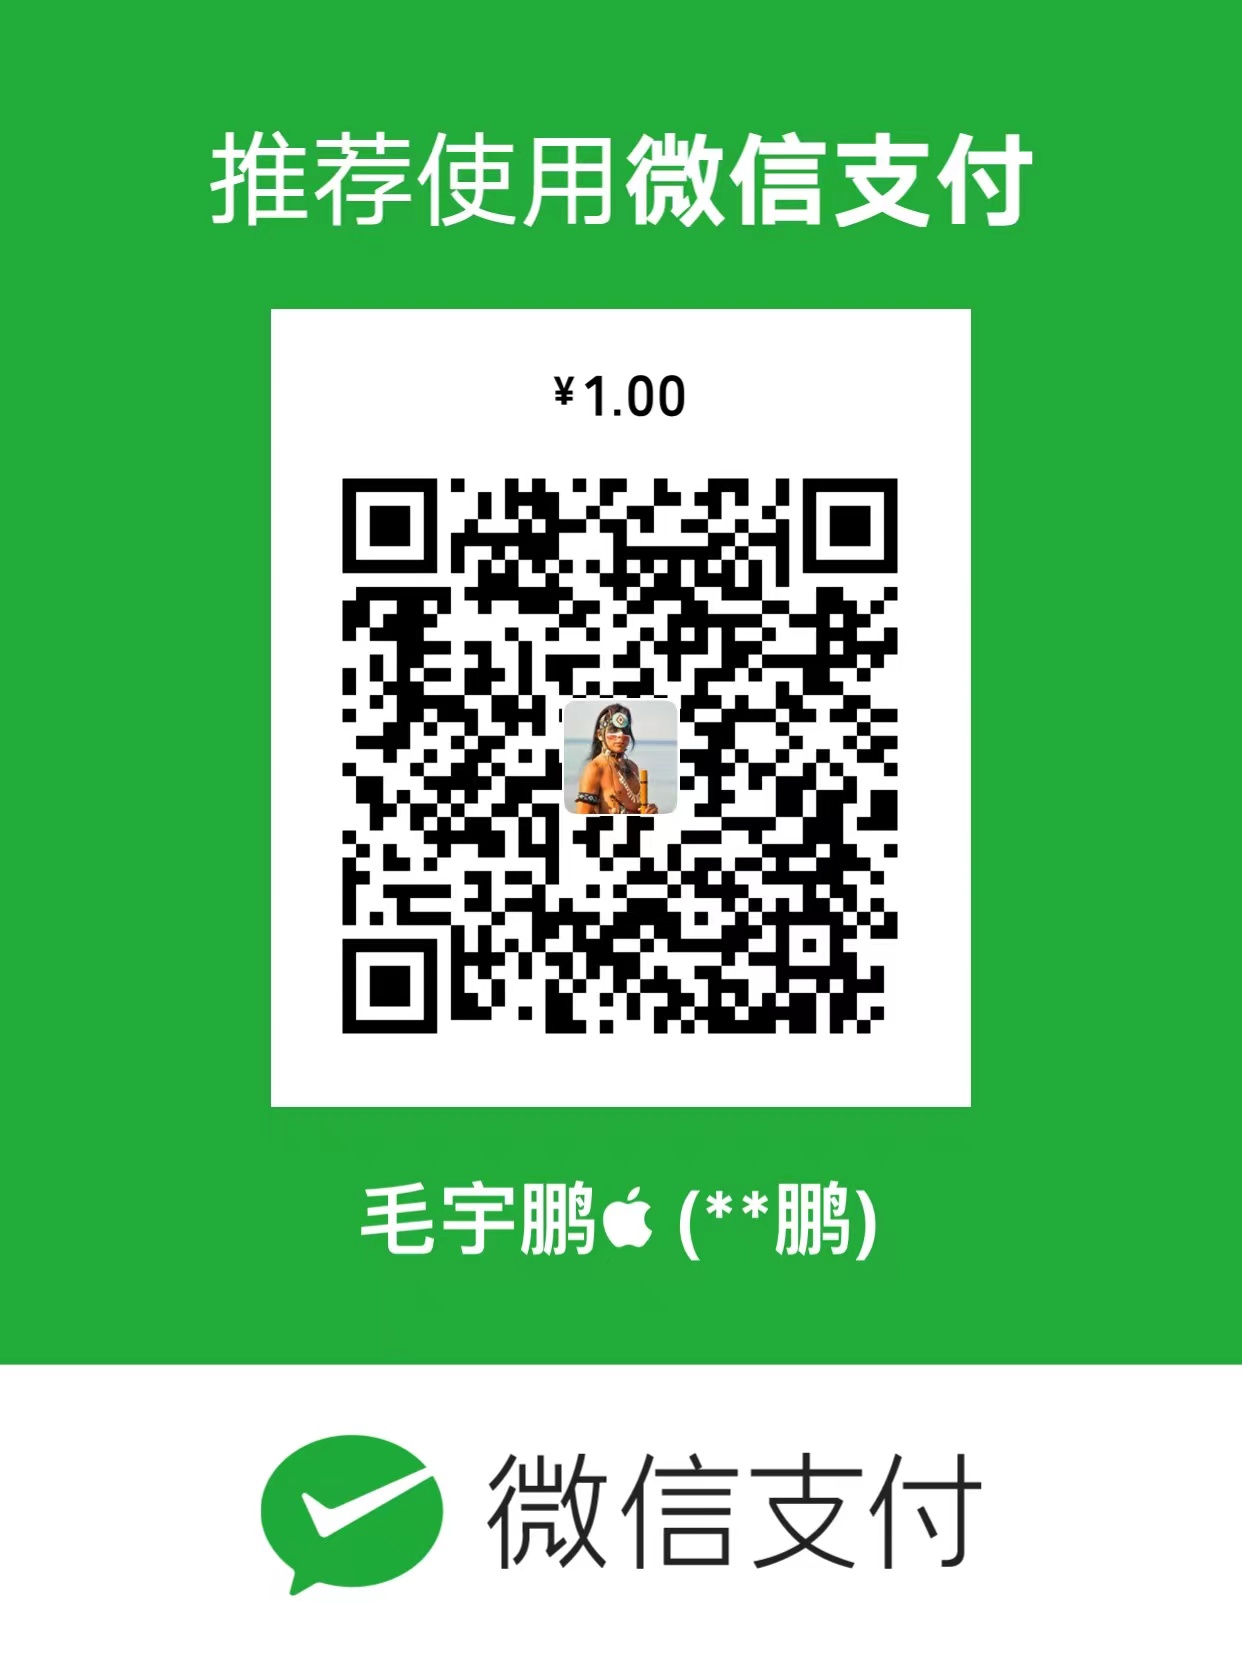 毛宇鹏 WeChat Pay